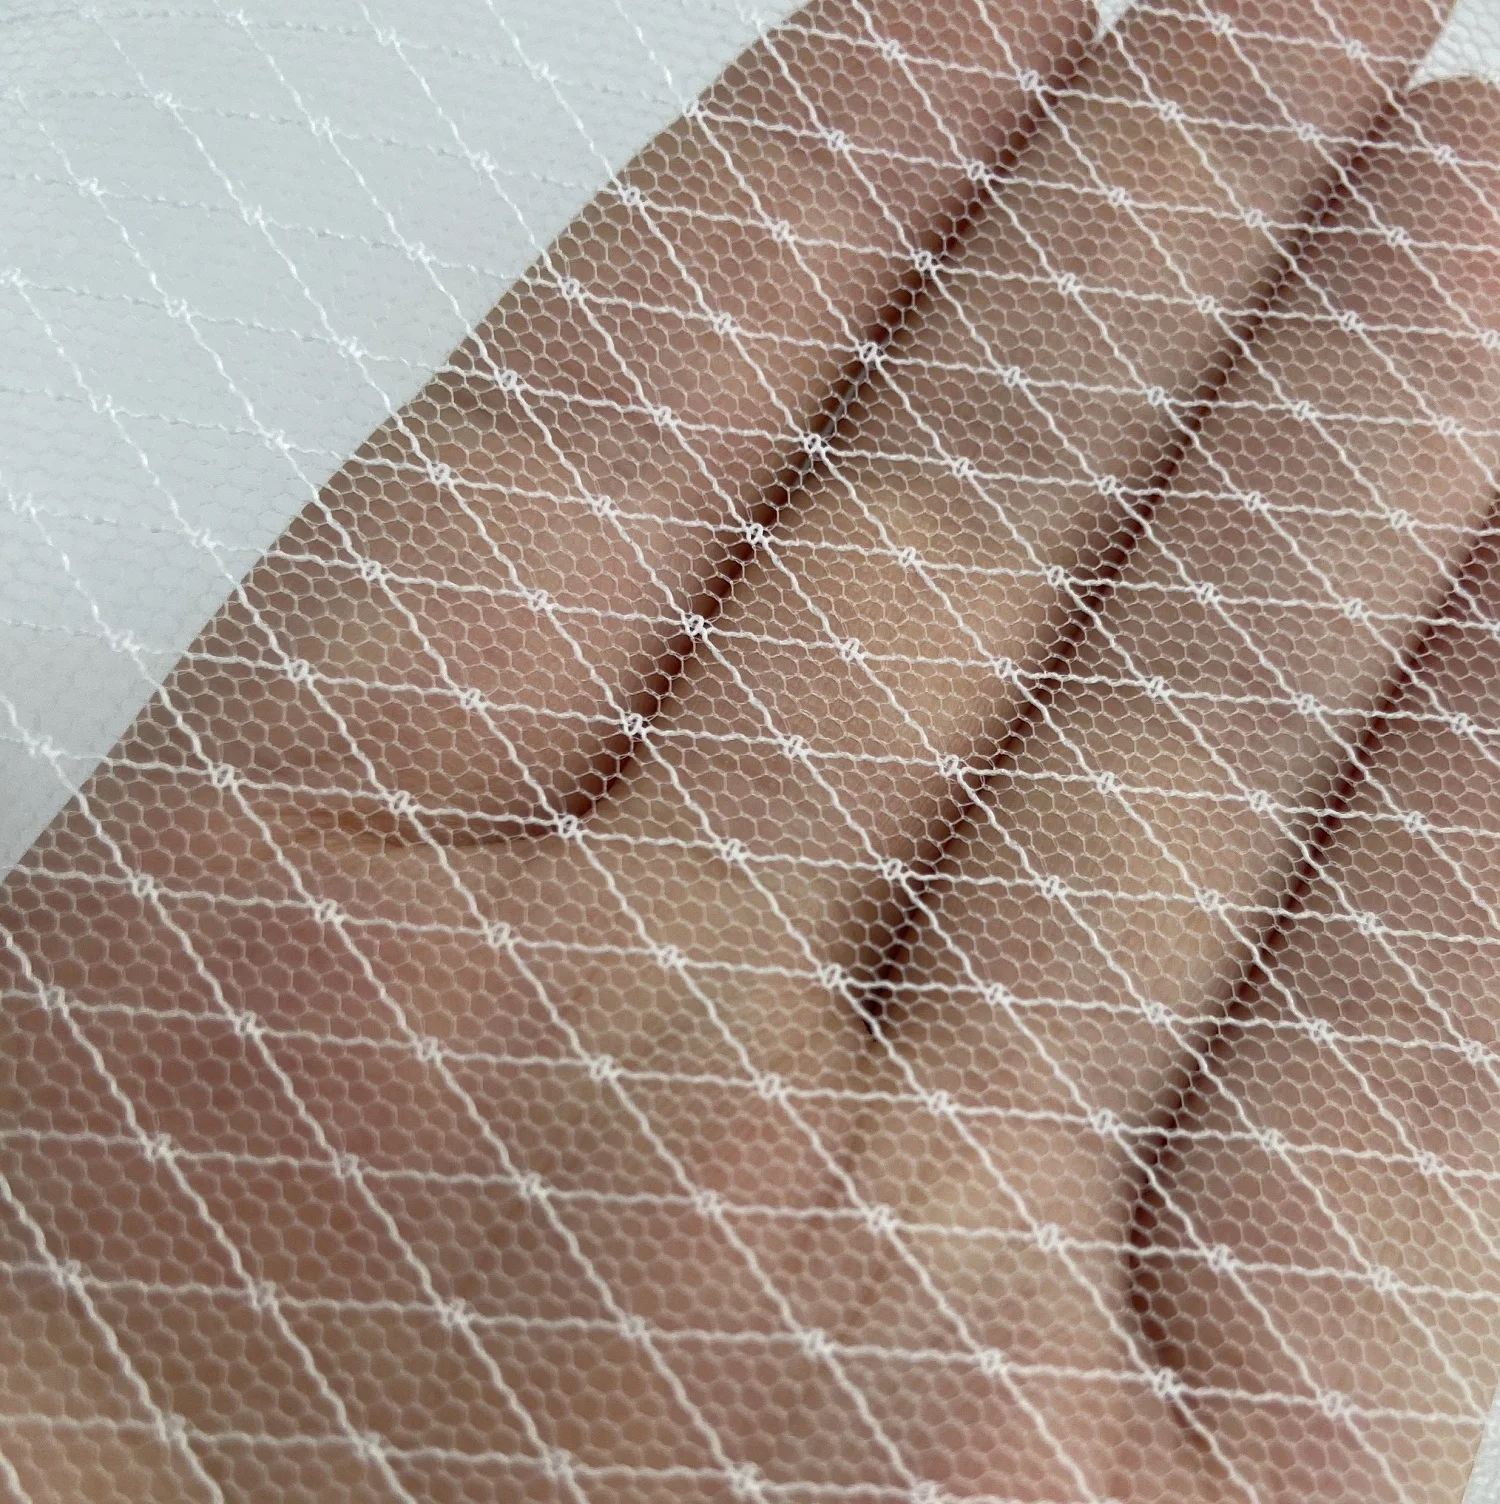 
CYG Fancy Dots Stripe Star Design Jacquard Mesh 100% Polyester Bridal Fabric 